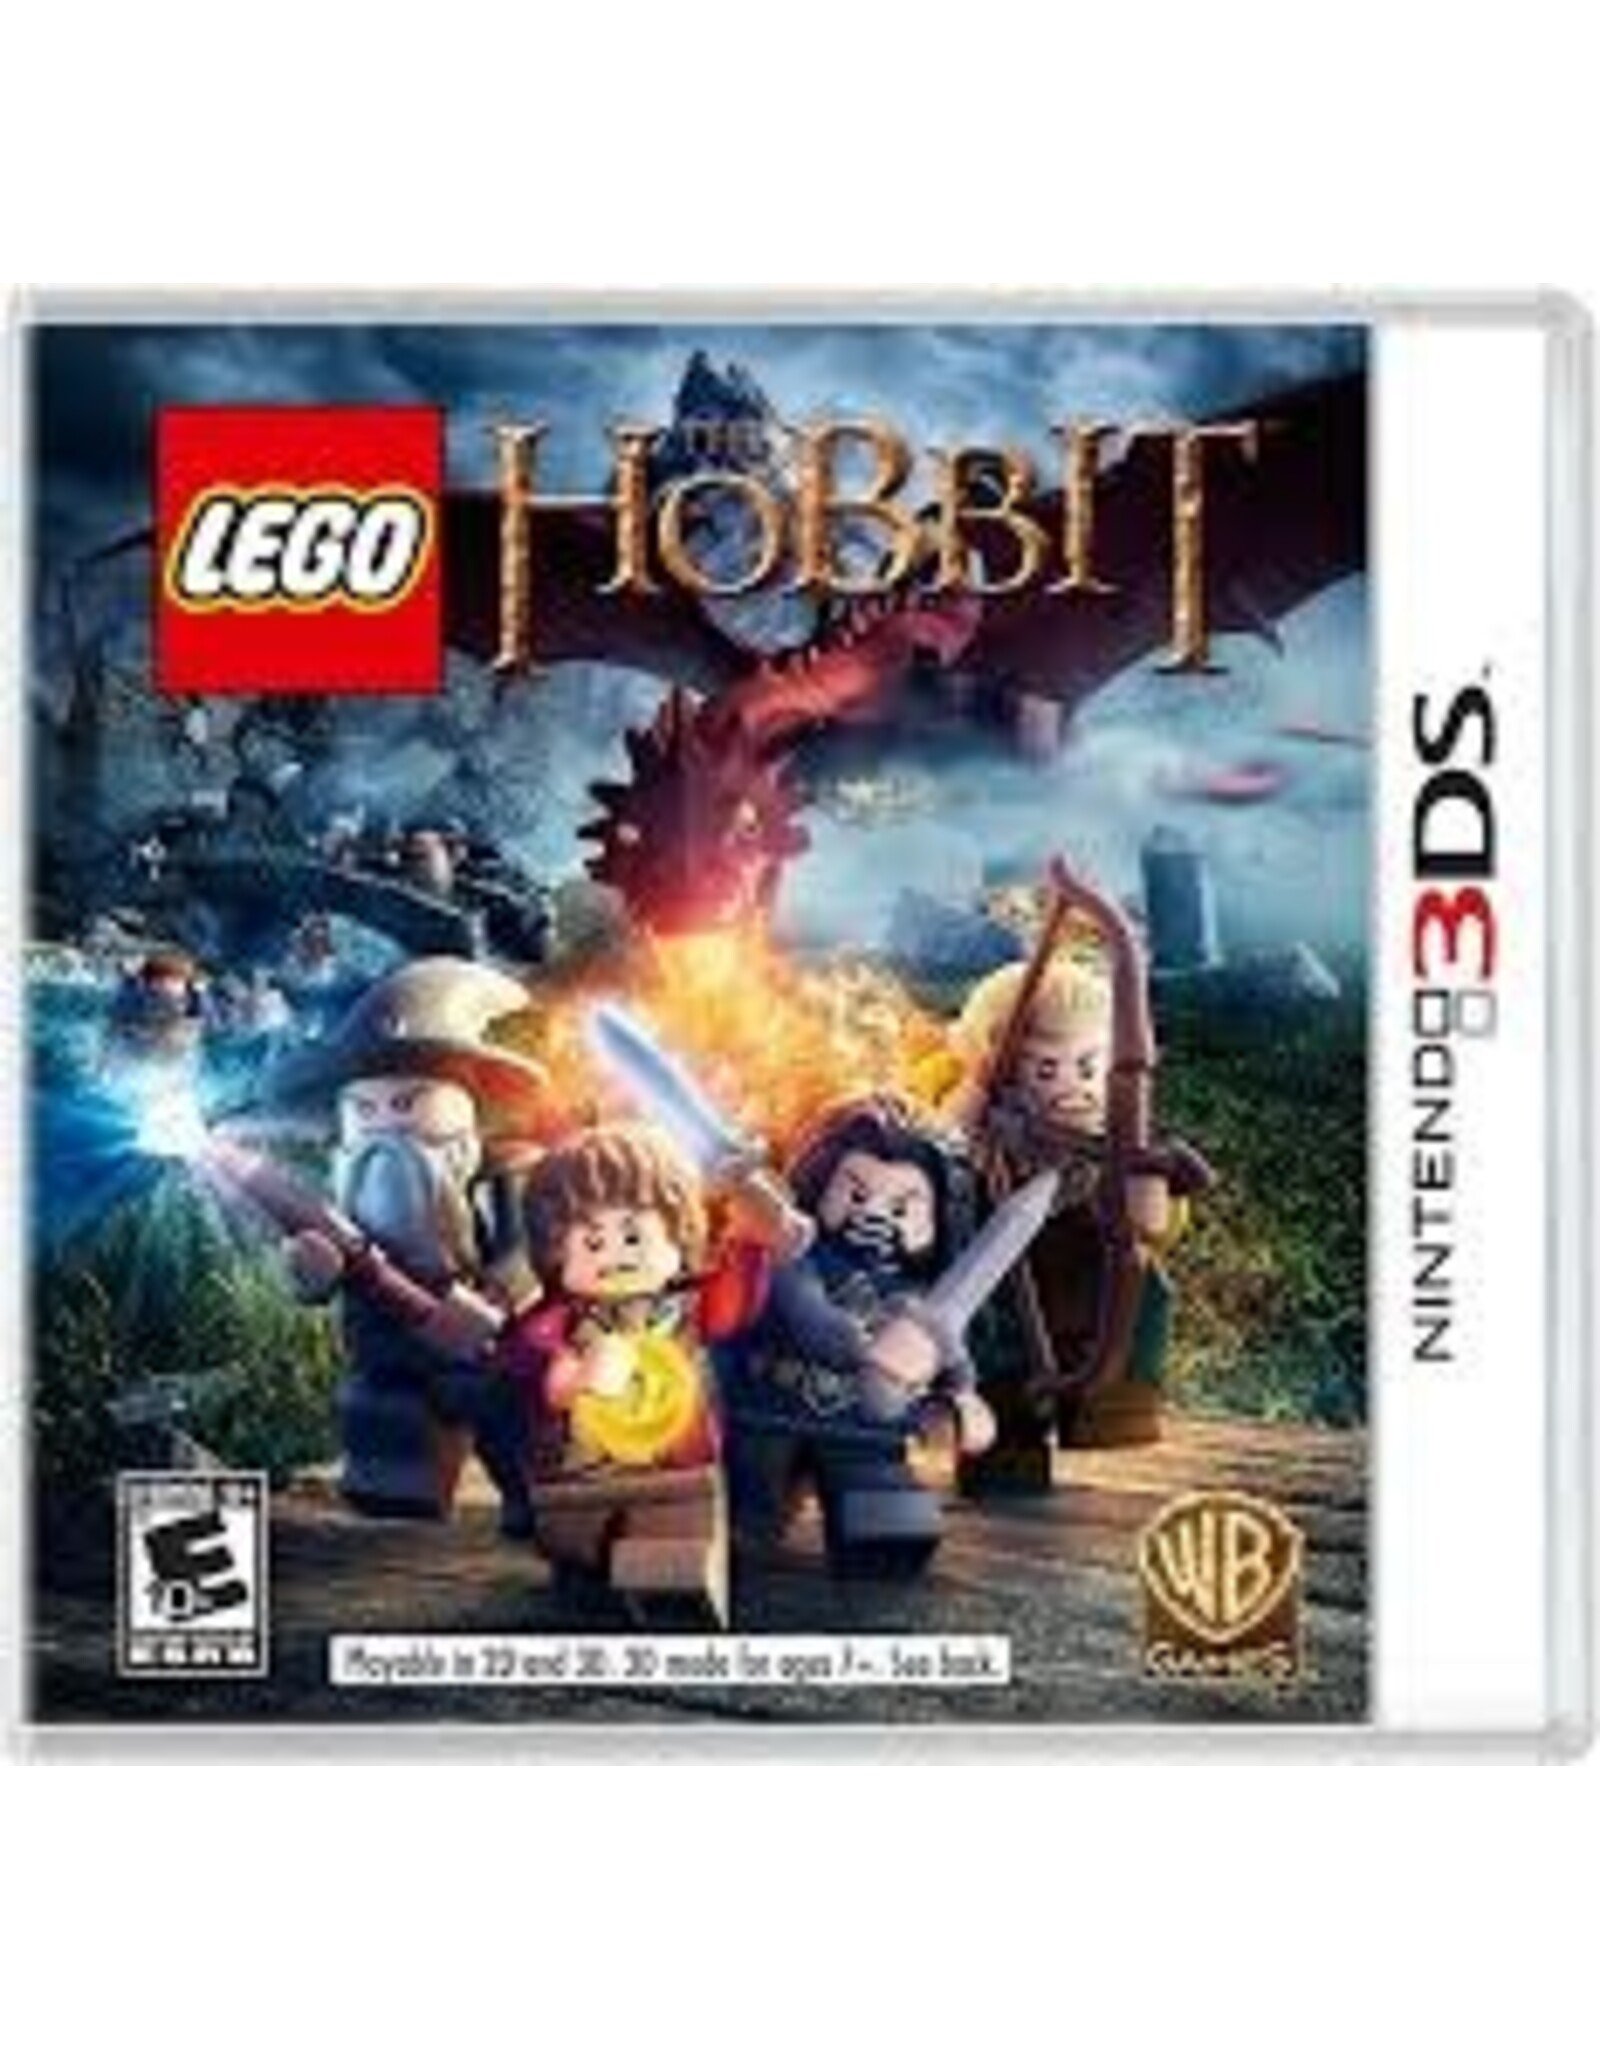 Nintendo 3DS LEGO The Hobbit (Used)